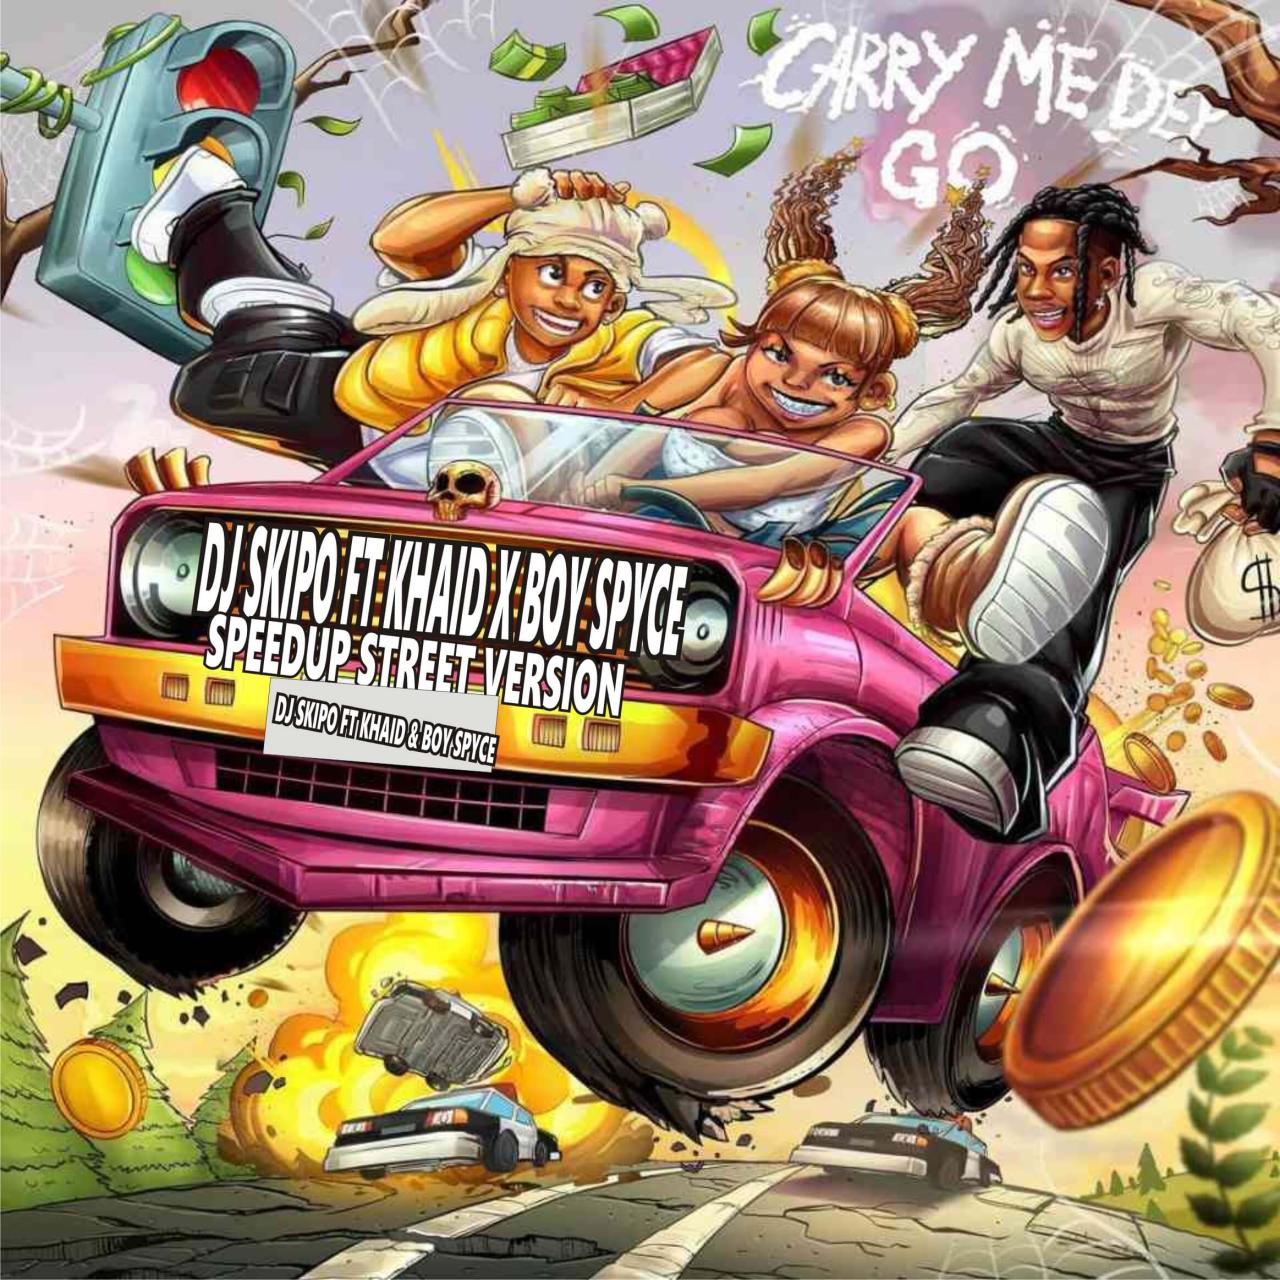 DJ Skipo Ft khaid & Boy spyce - Carry Me Go Street Version Speedup